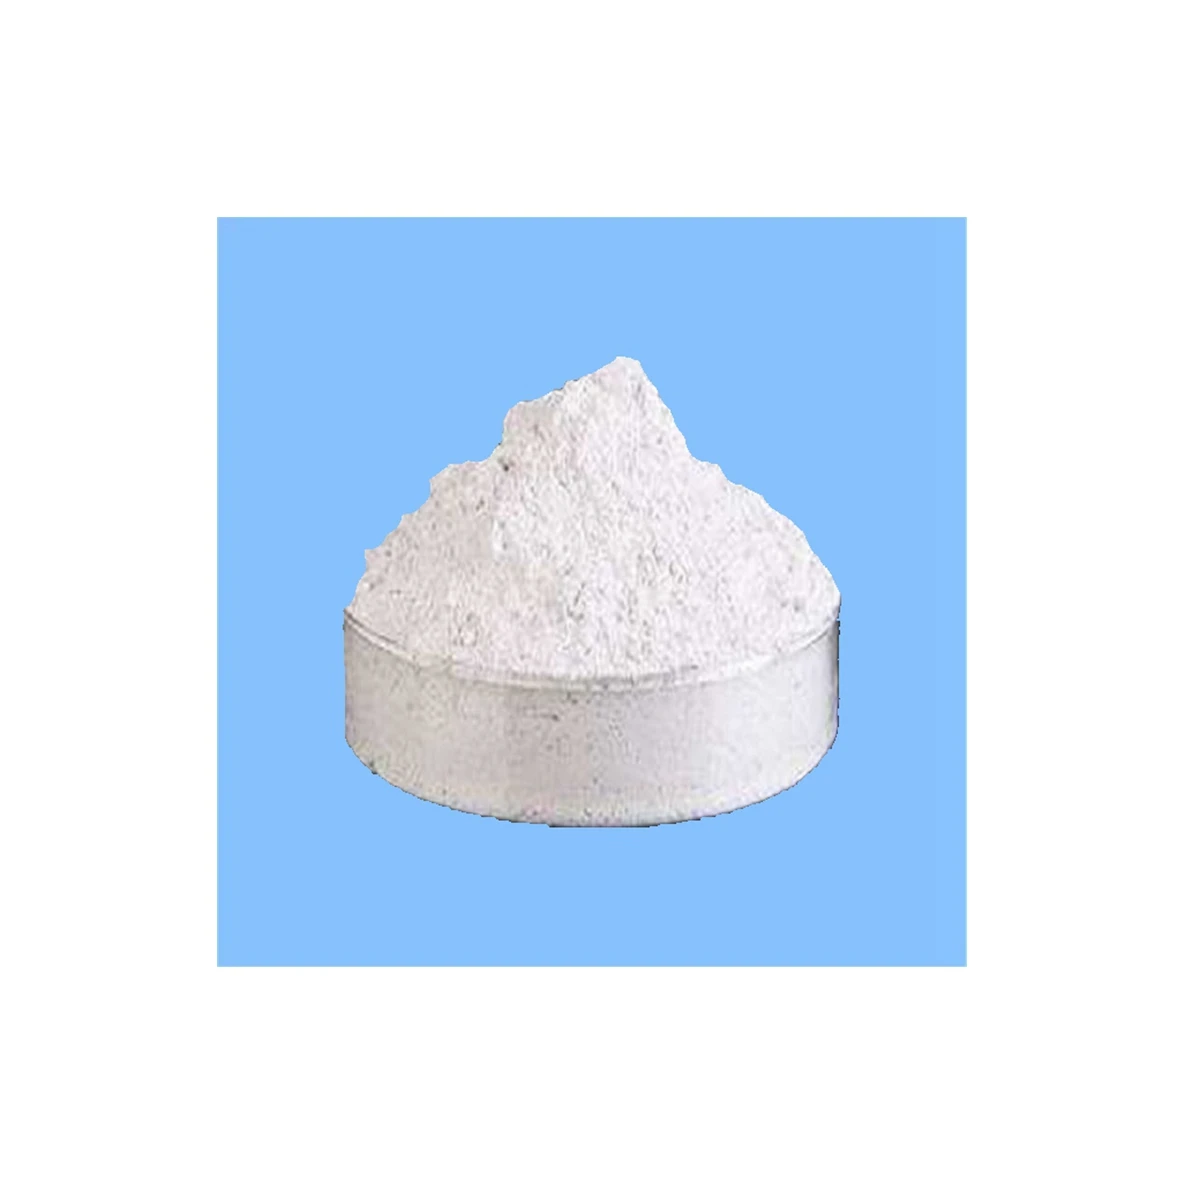 Guaranteed quality unique popular product low price magnesium oxide white inorganics magnesium oxide powder